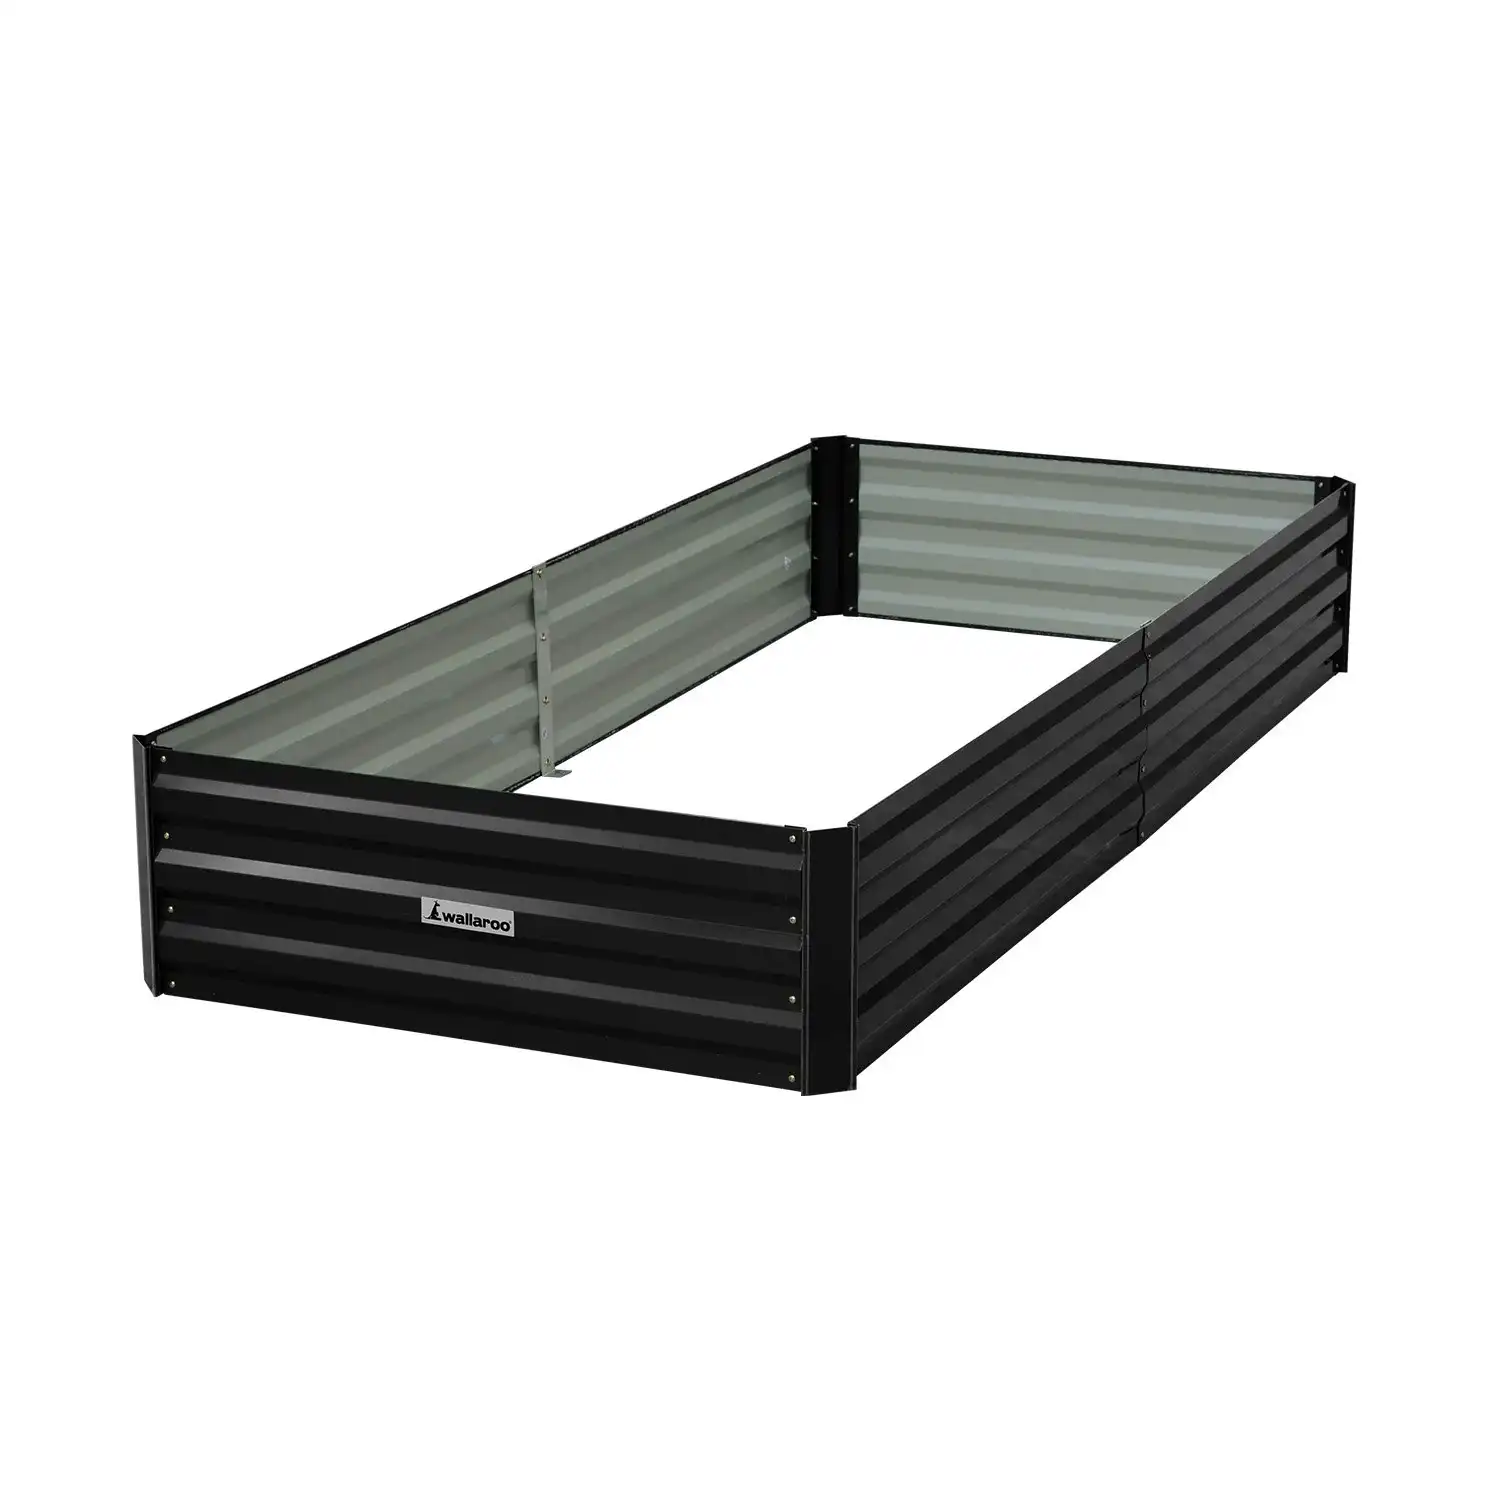 Wallaroo 210 x 90 x 30cm Galvanized Steel Garden Bed - Black